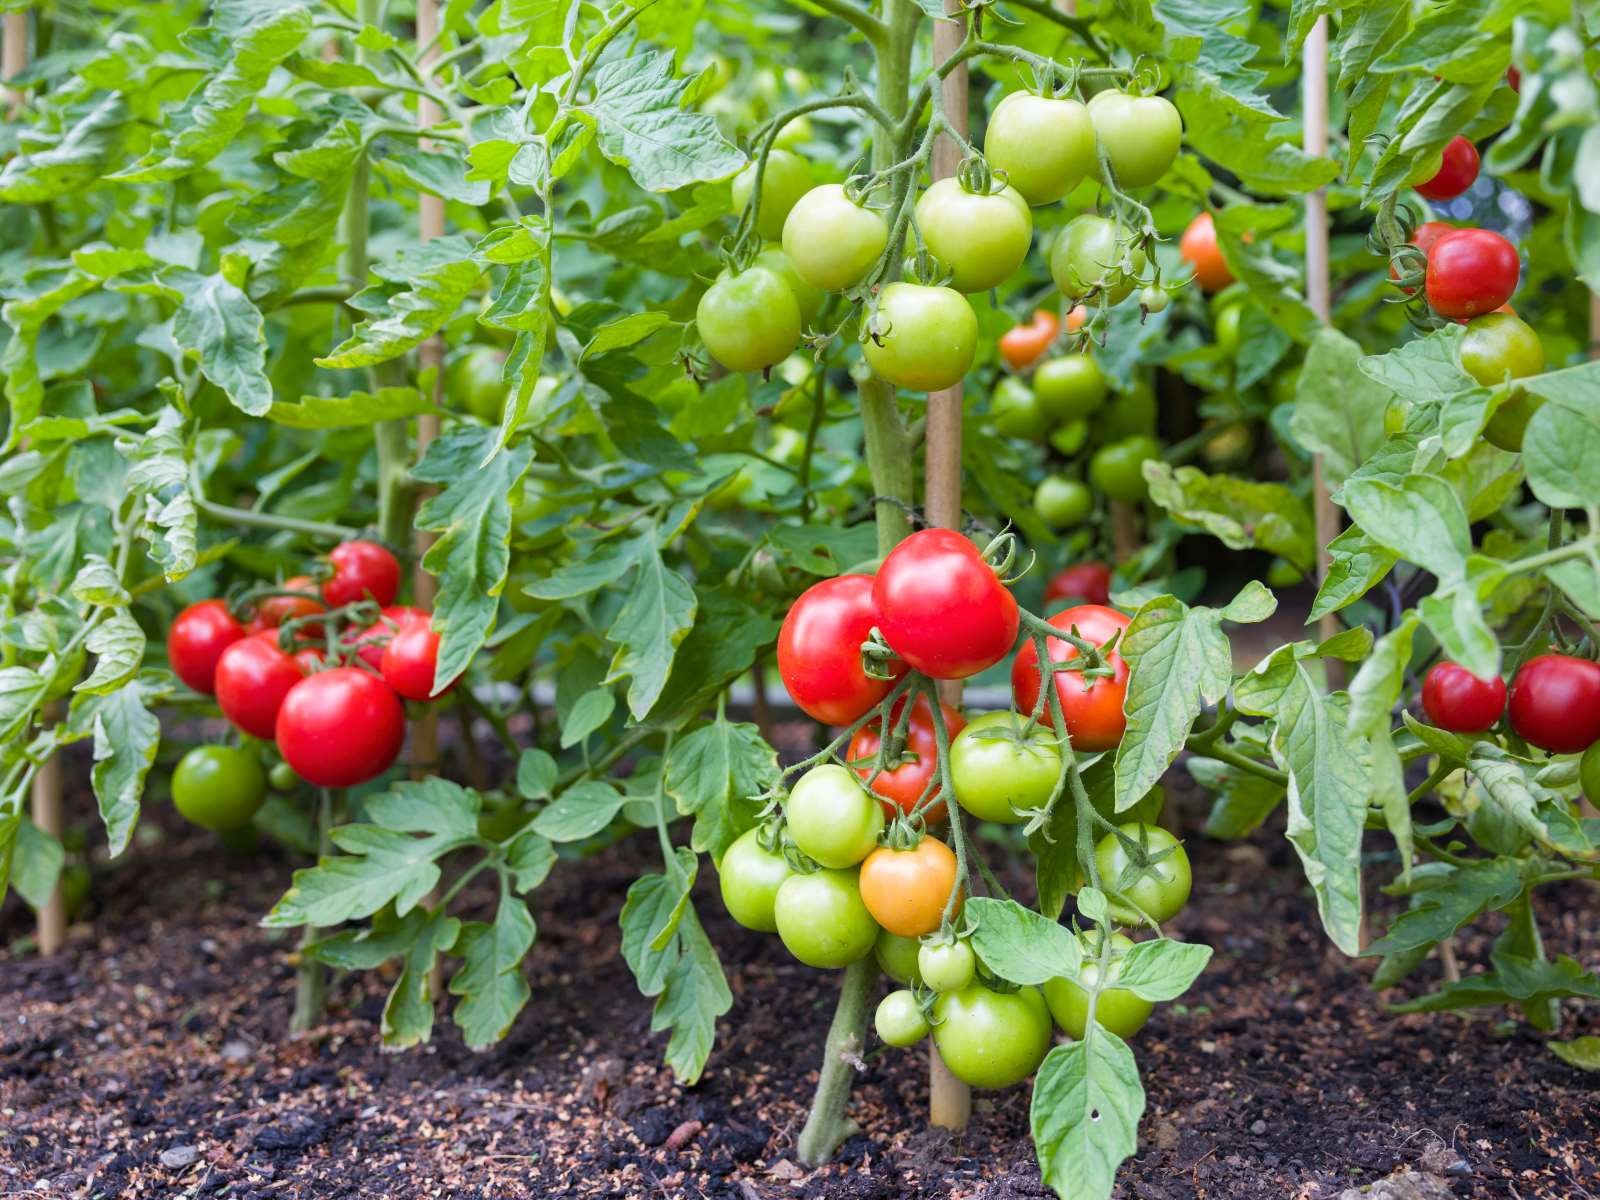 The Astonishing Depths Of Tomato Plant Roots Revealed!